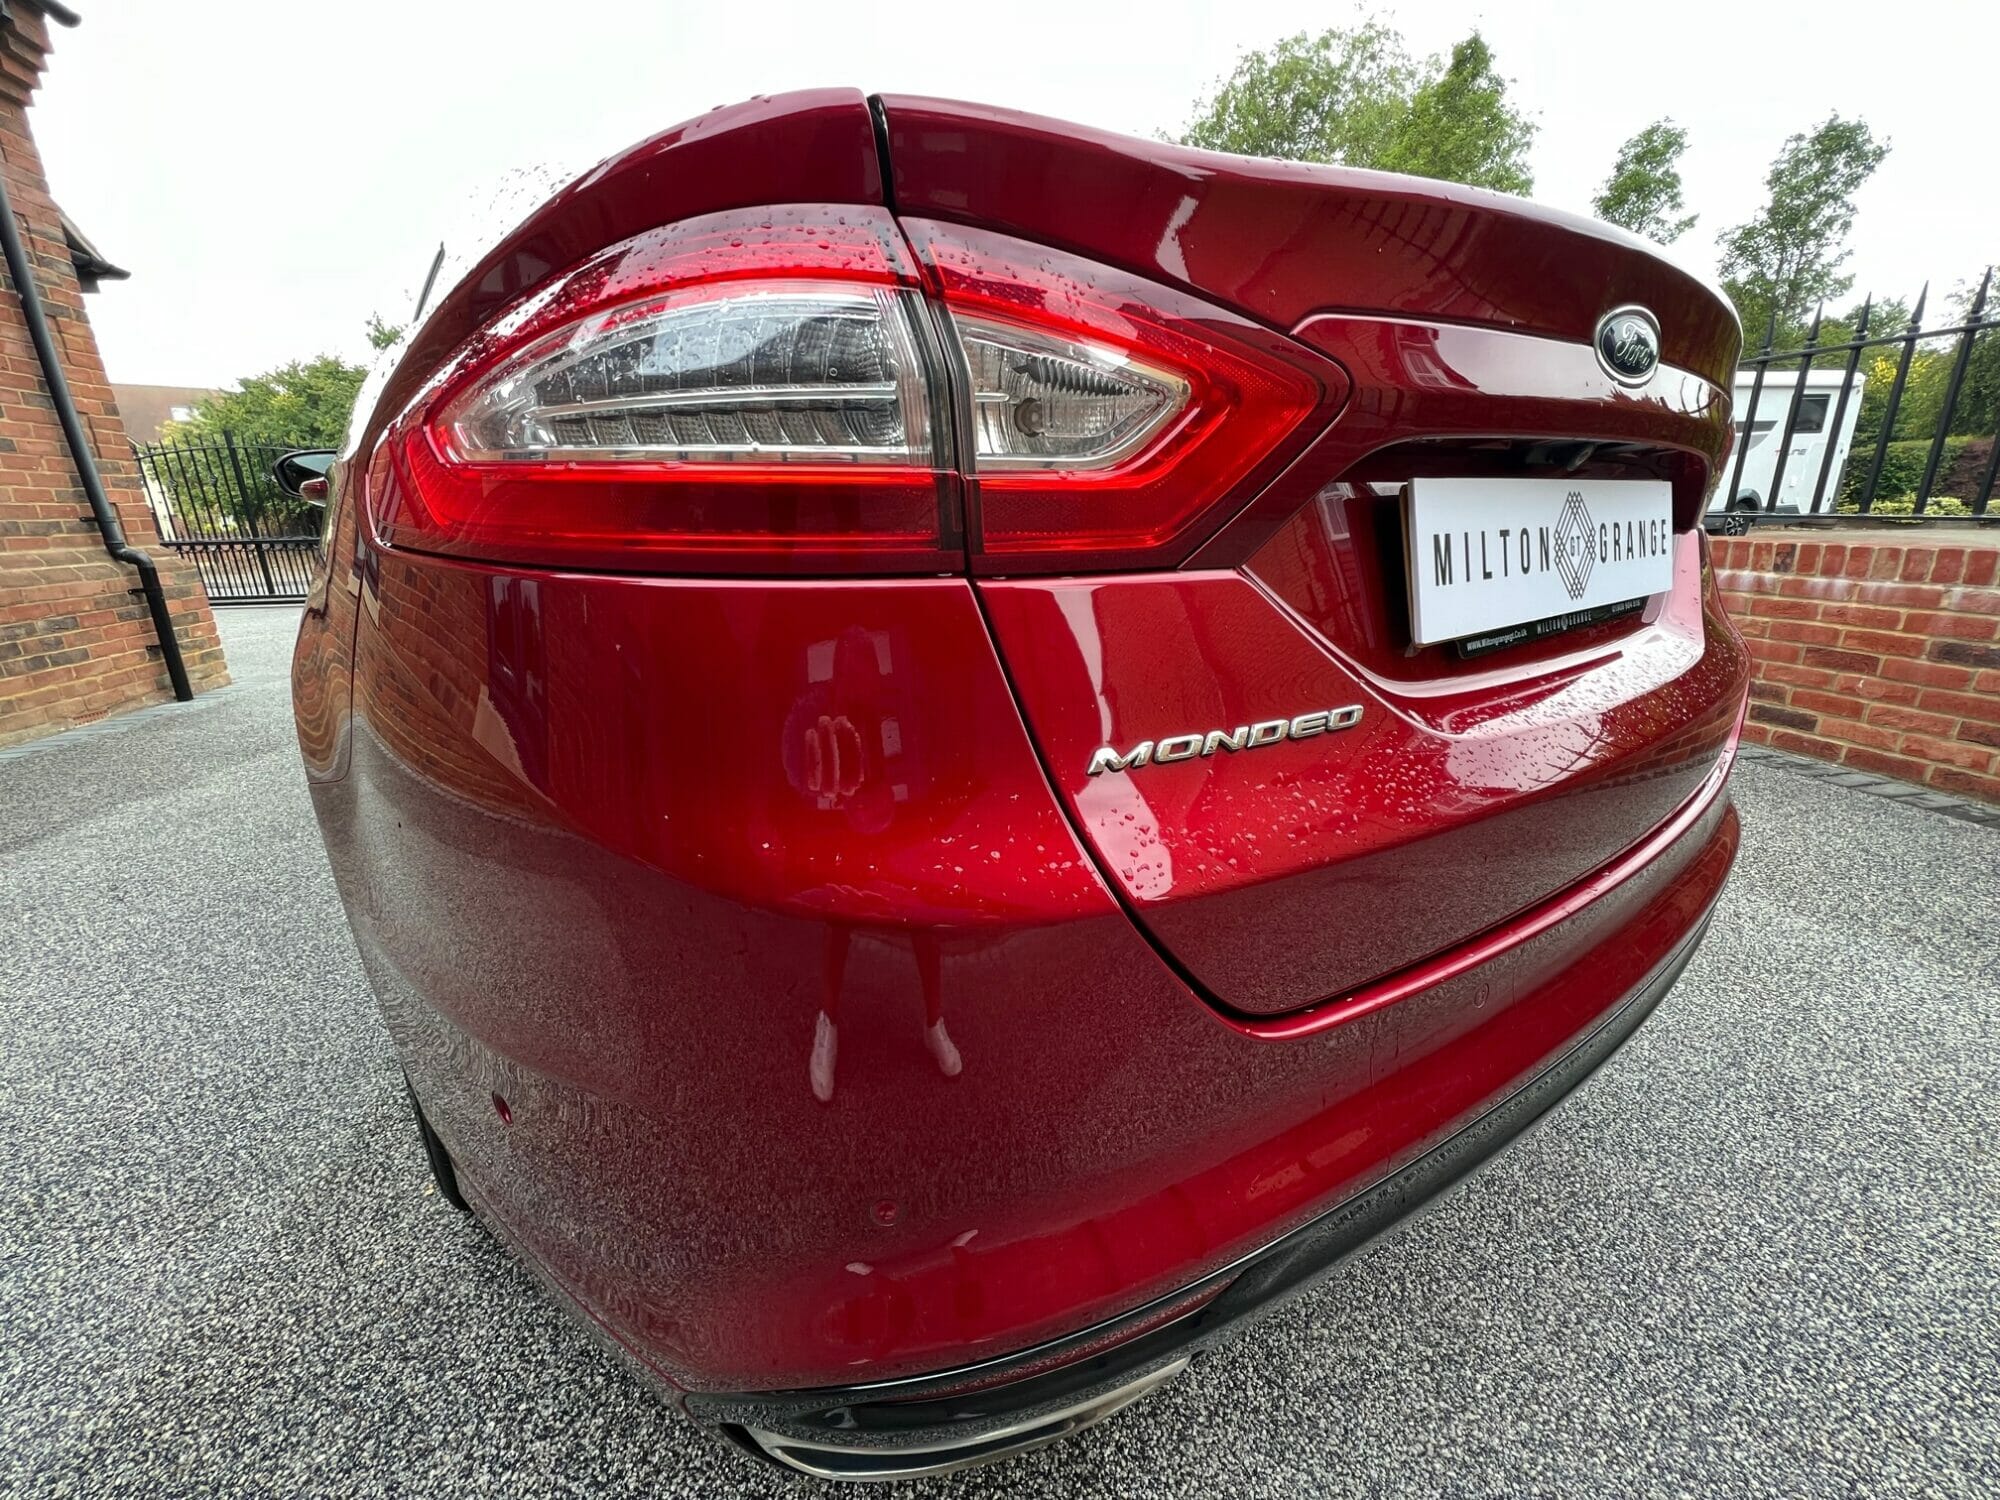 Ford Mondeo MK5 Titanium trim, in Ruby red coloud, sedan